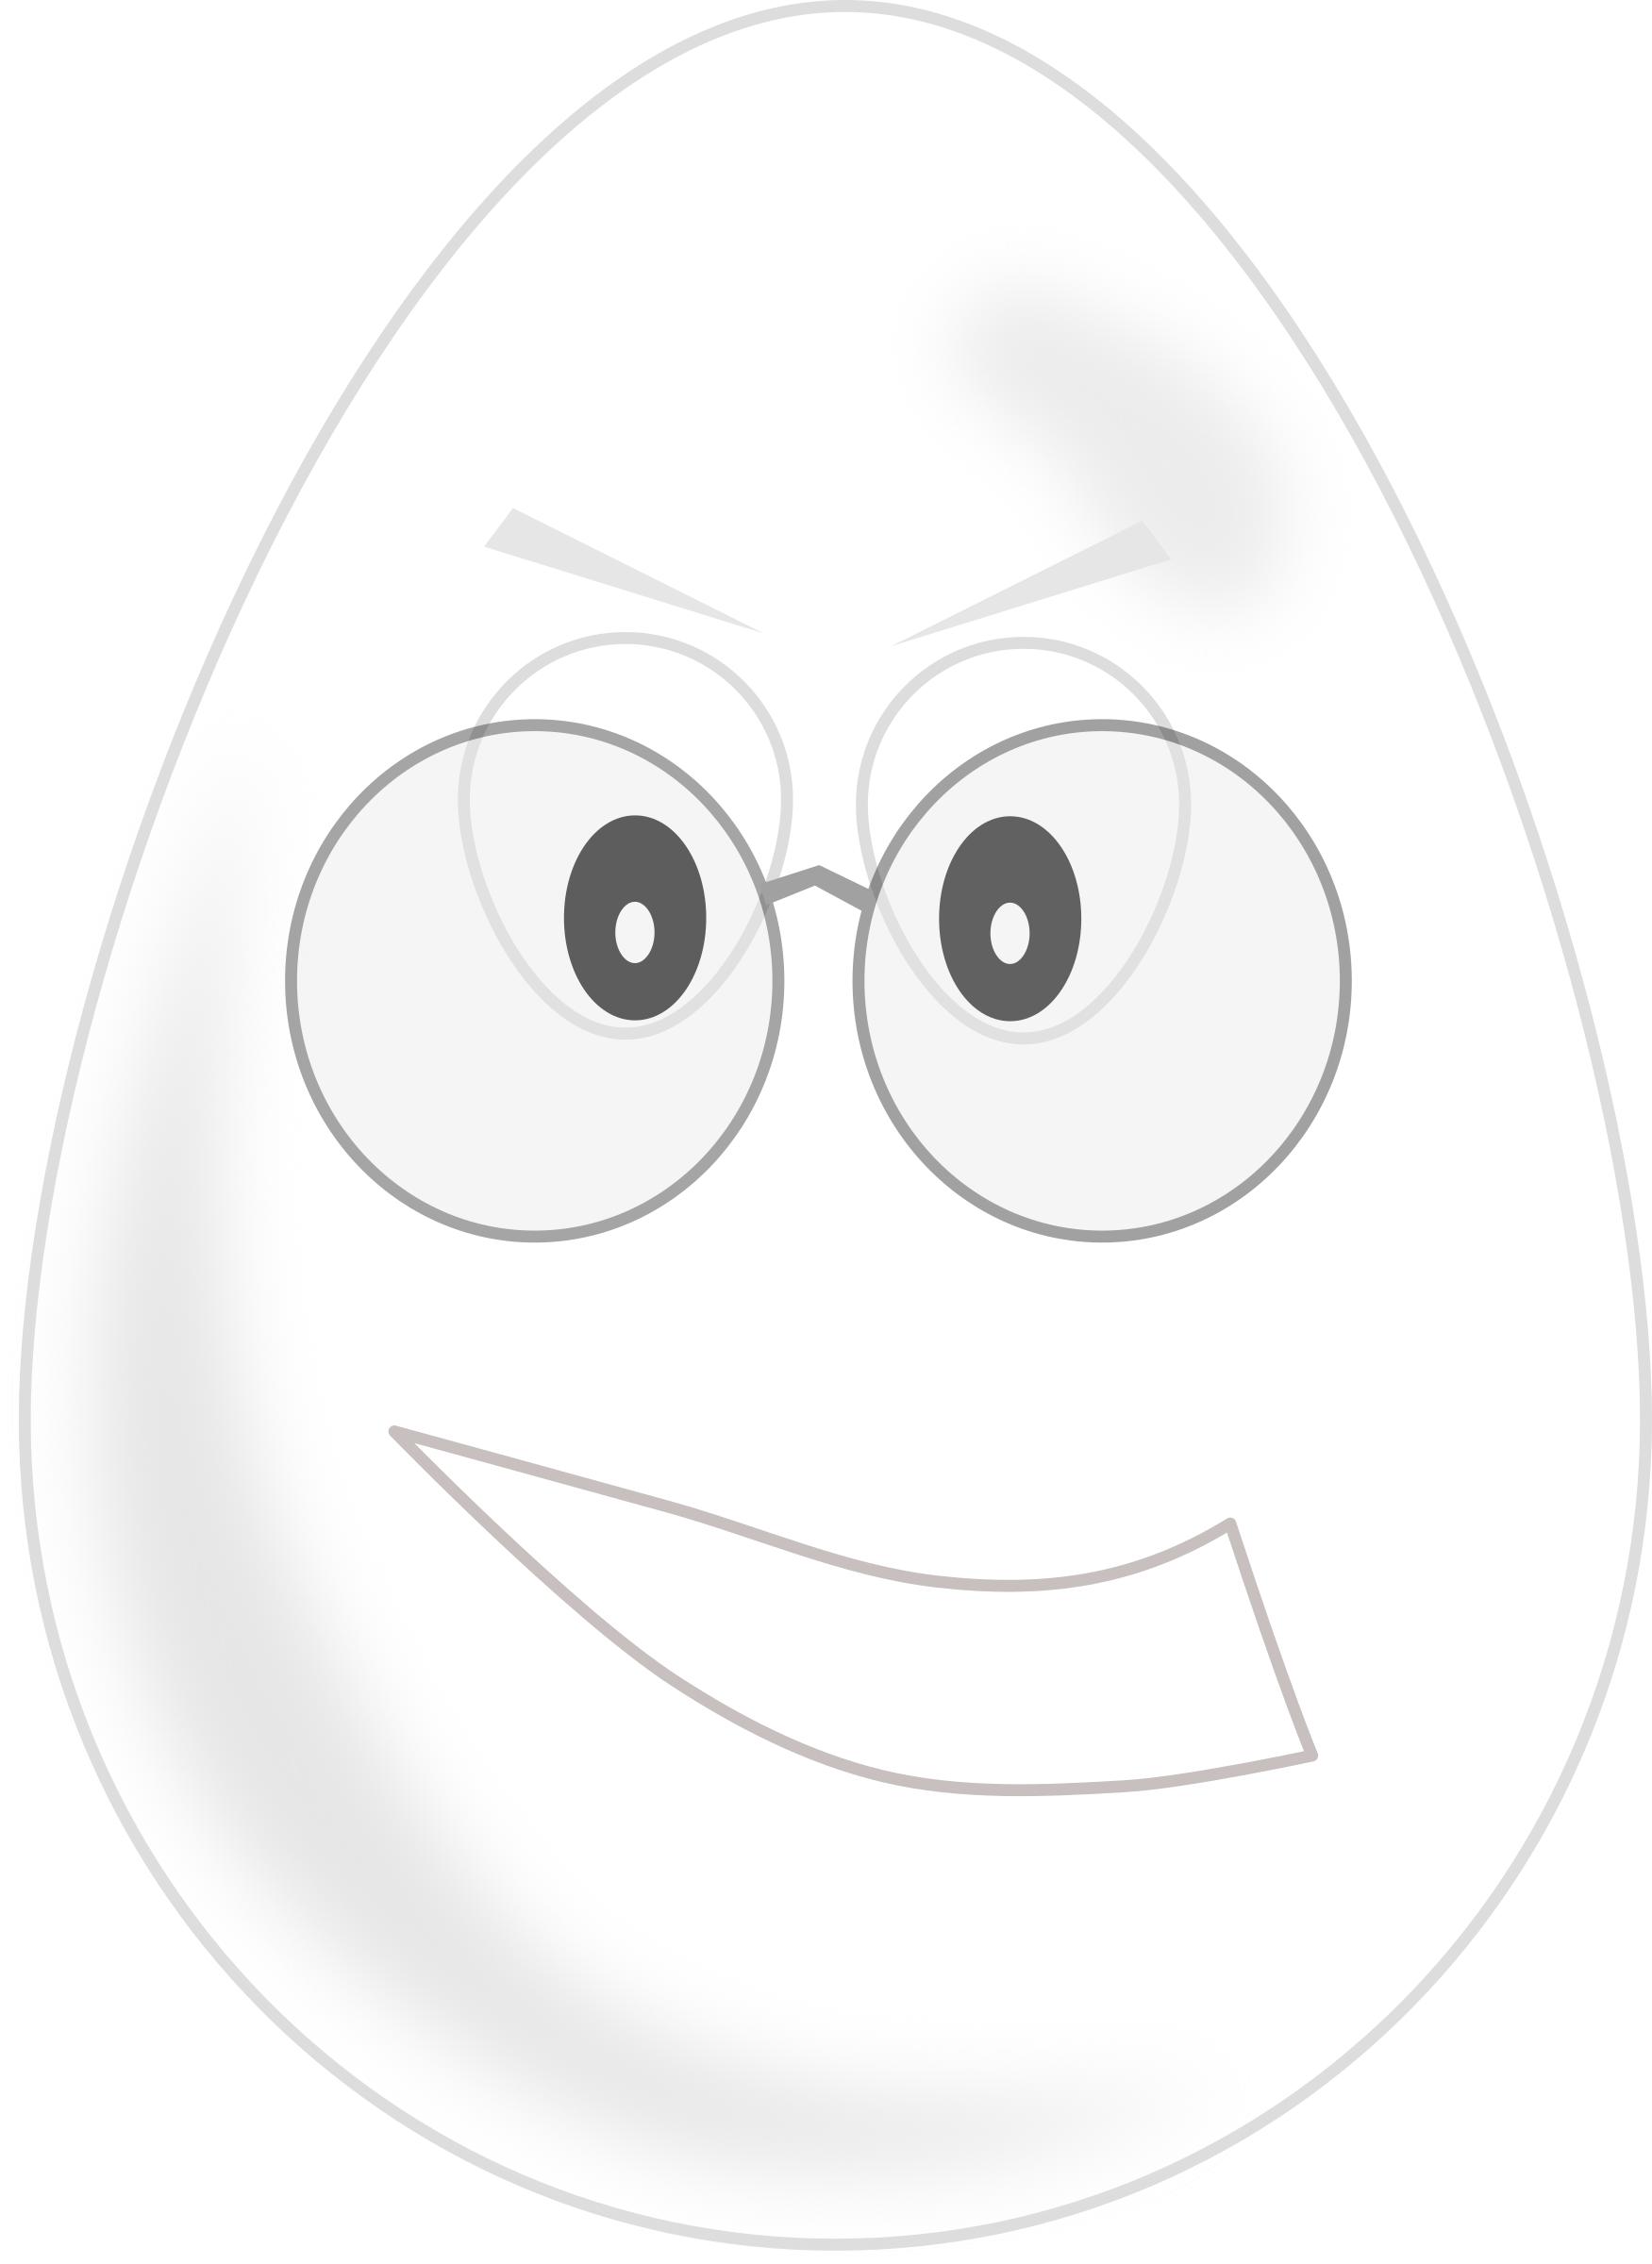 egg wear glasses png